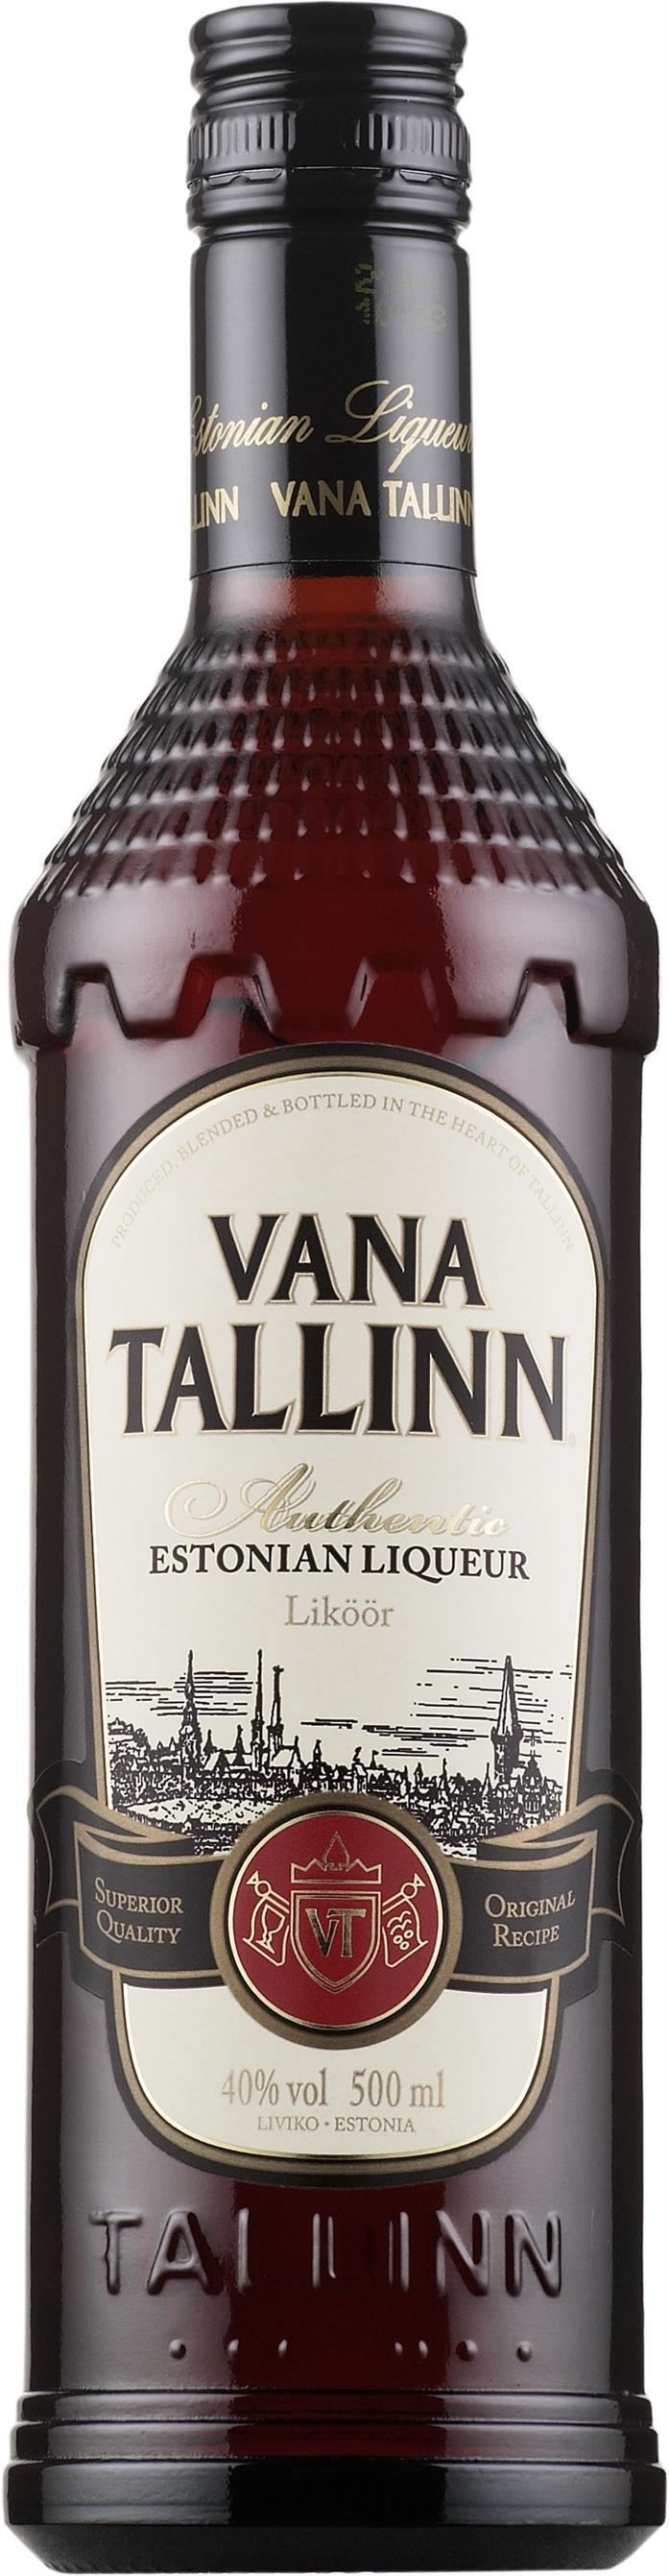 Vana Tallinn Vana Tallinn Liqueur amp bitter Alko